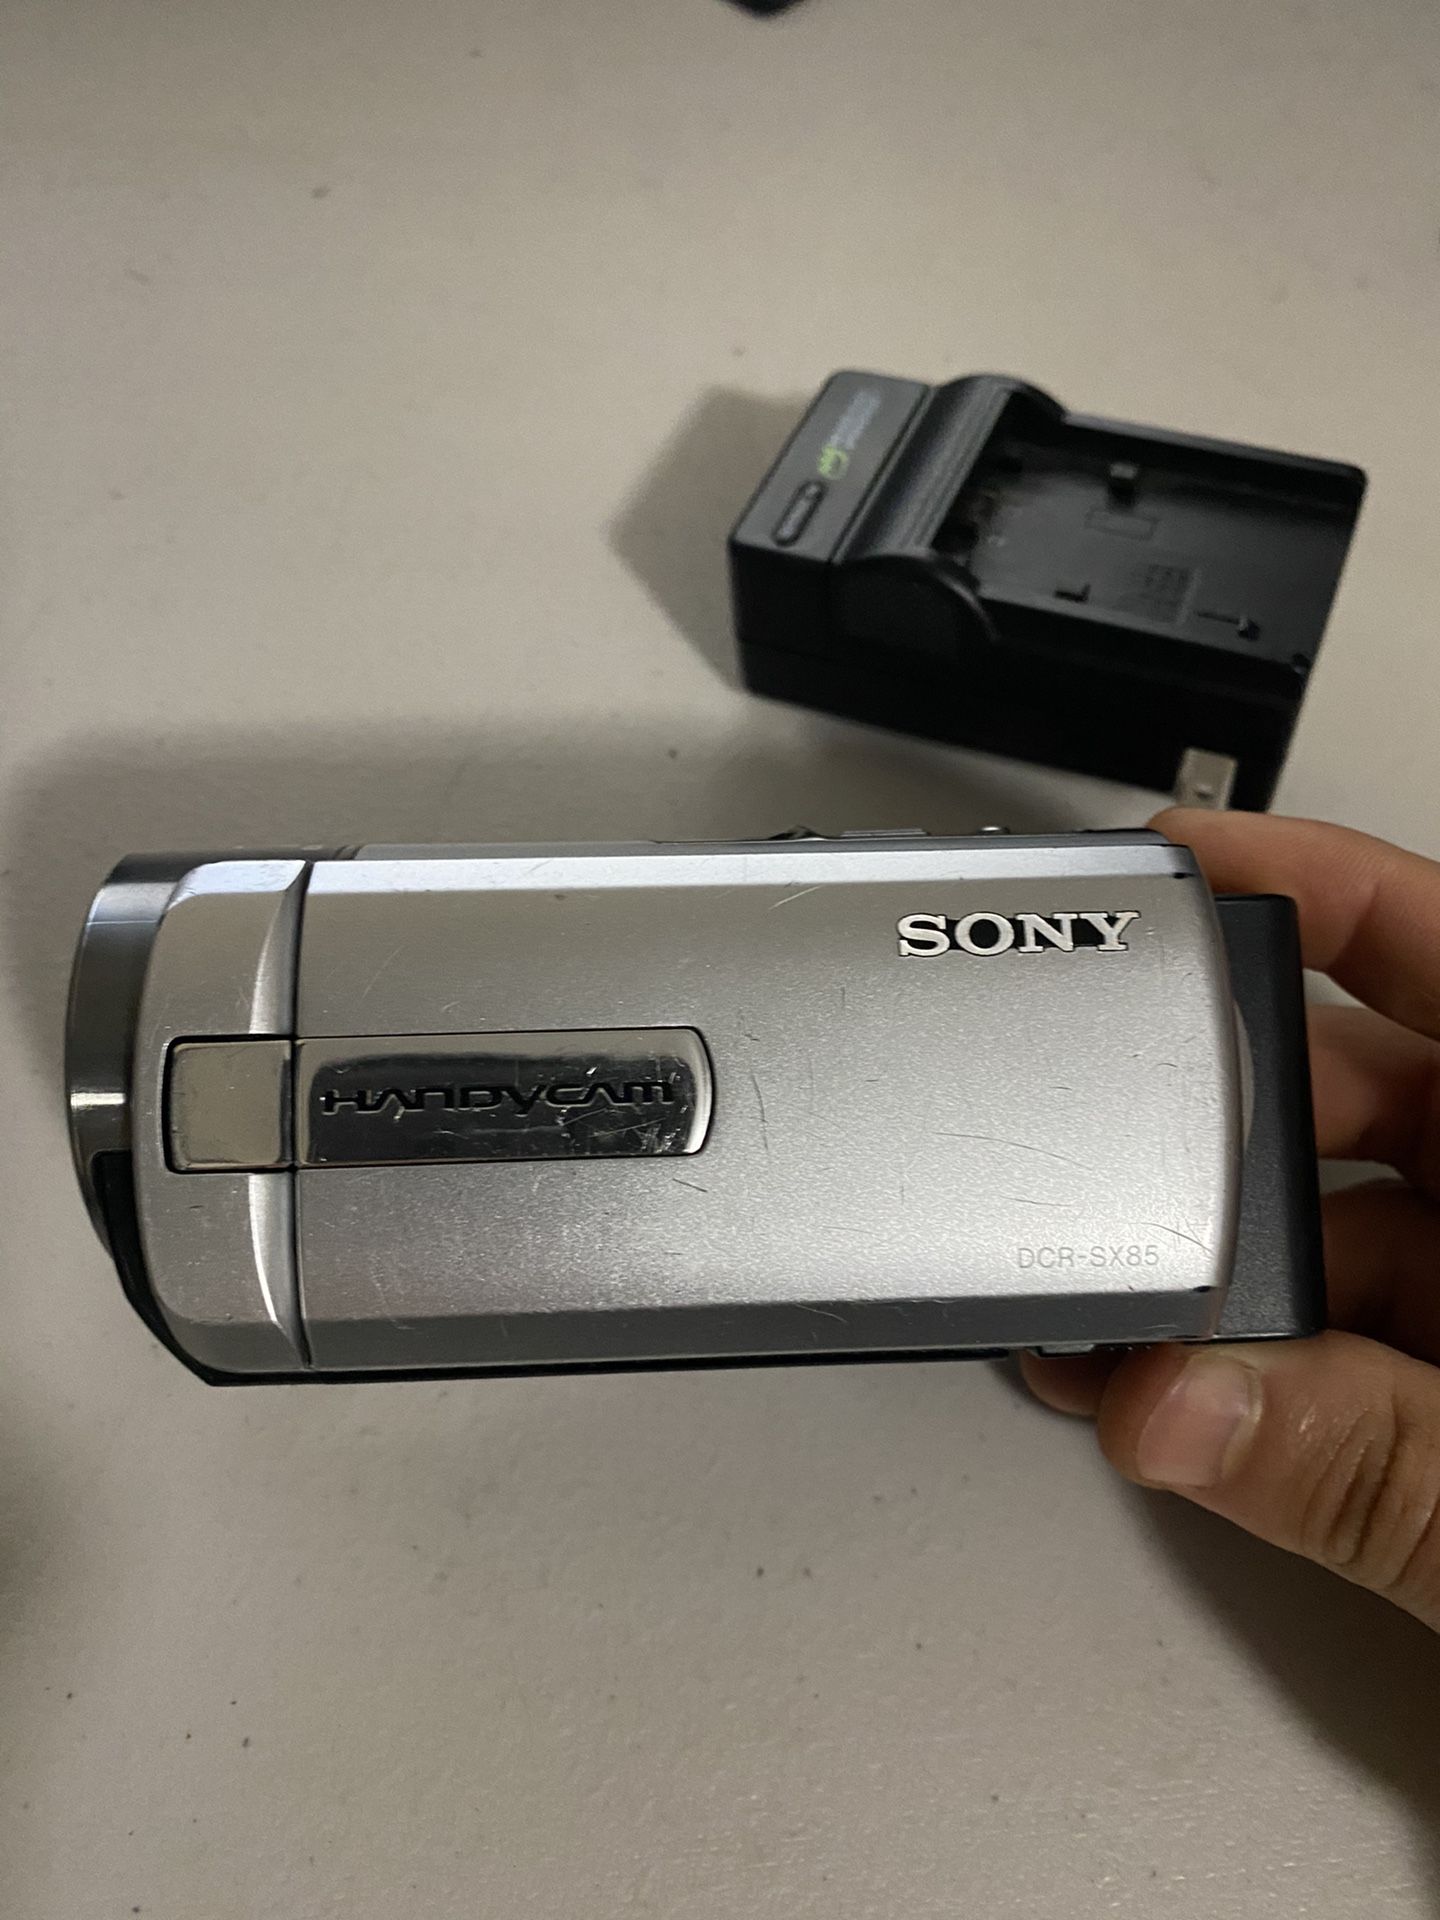 Sony camcorder DCR-SX85